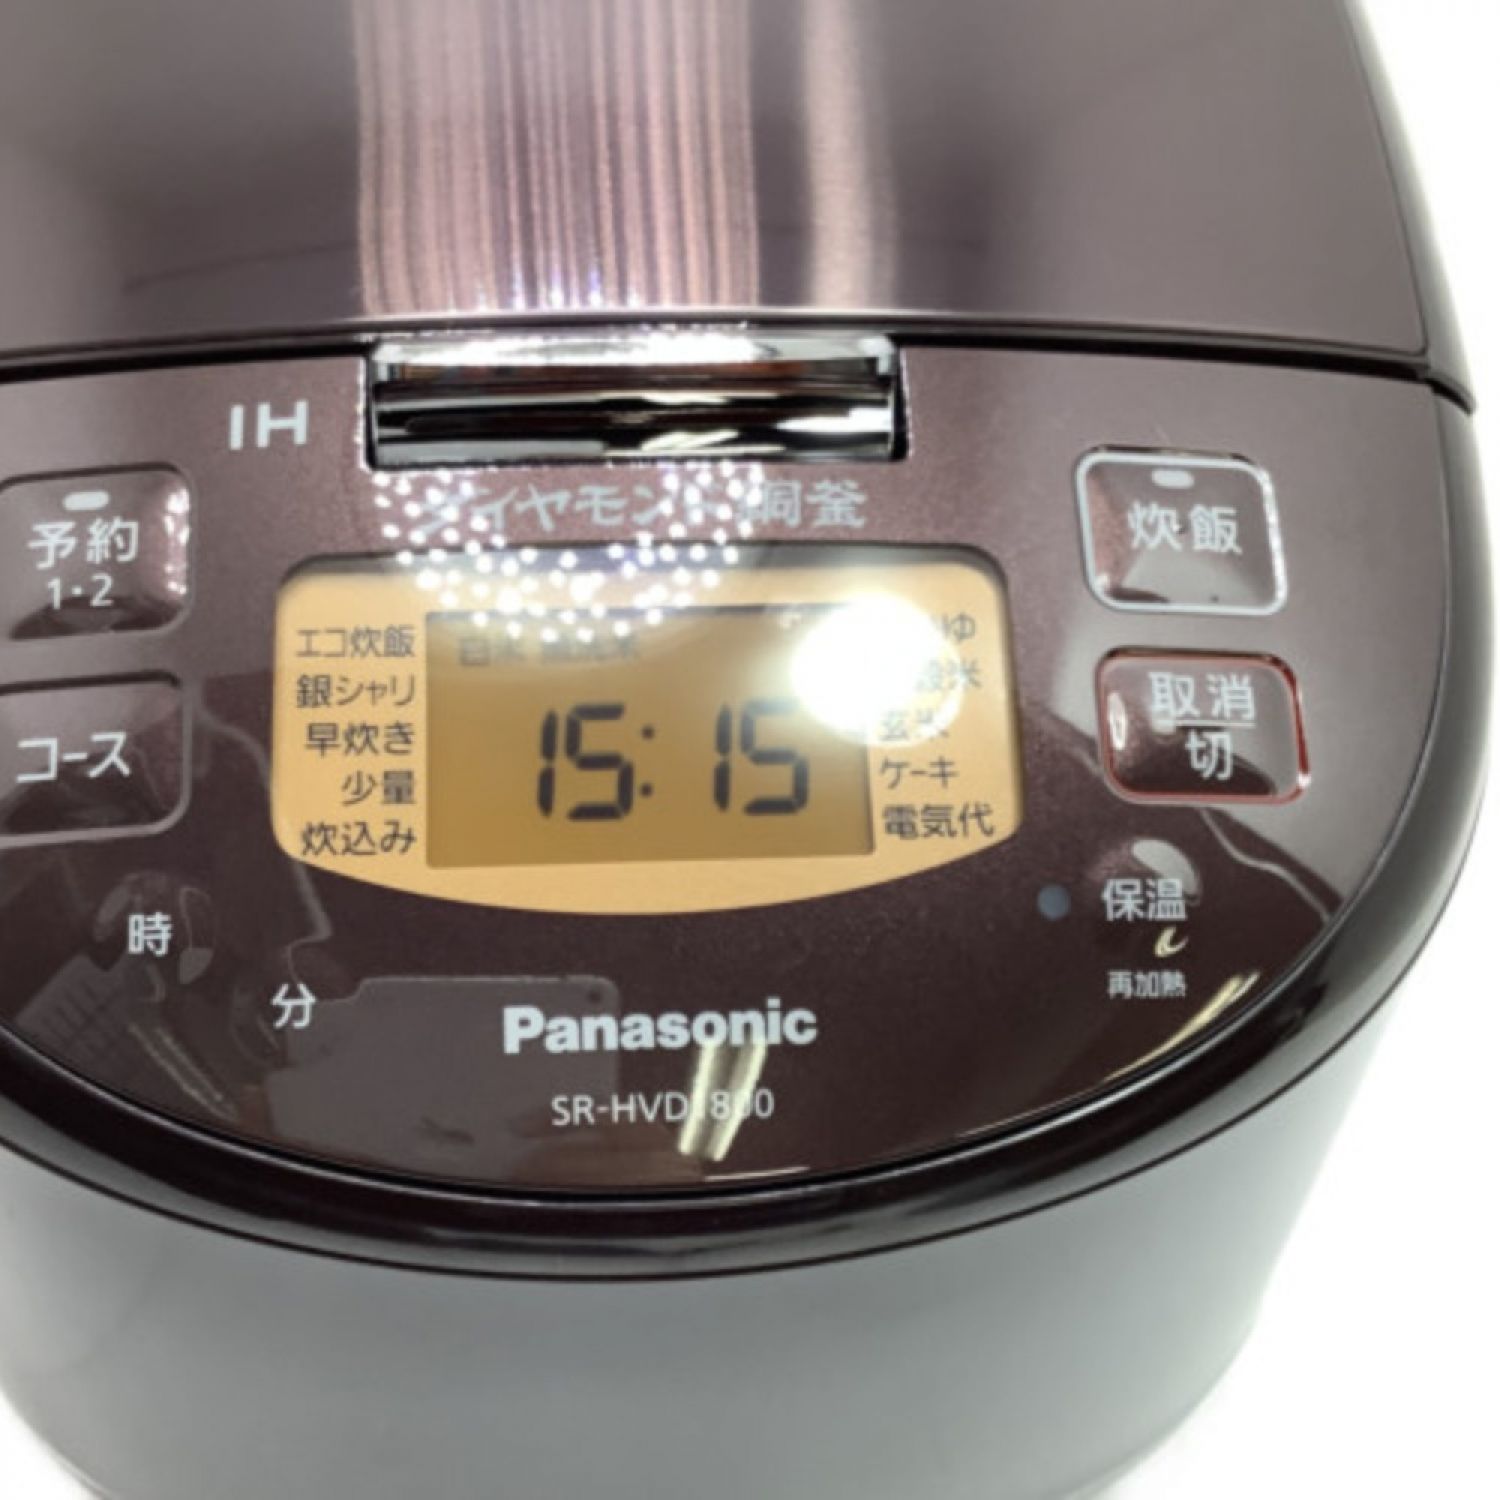 Panasonic パナソニック 炊飯器 SR-HVD1800-T ブラウン